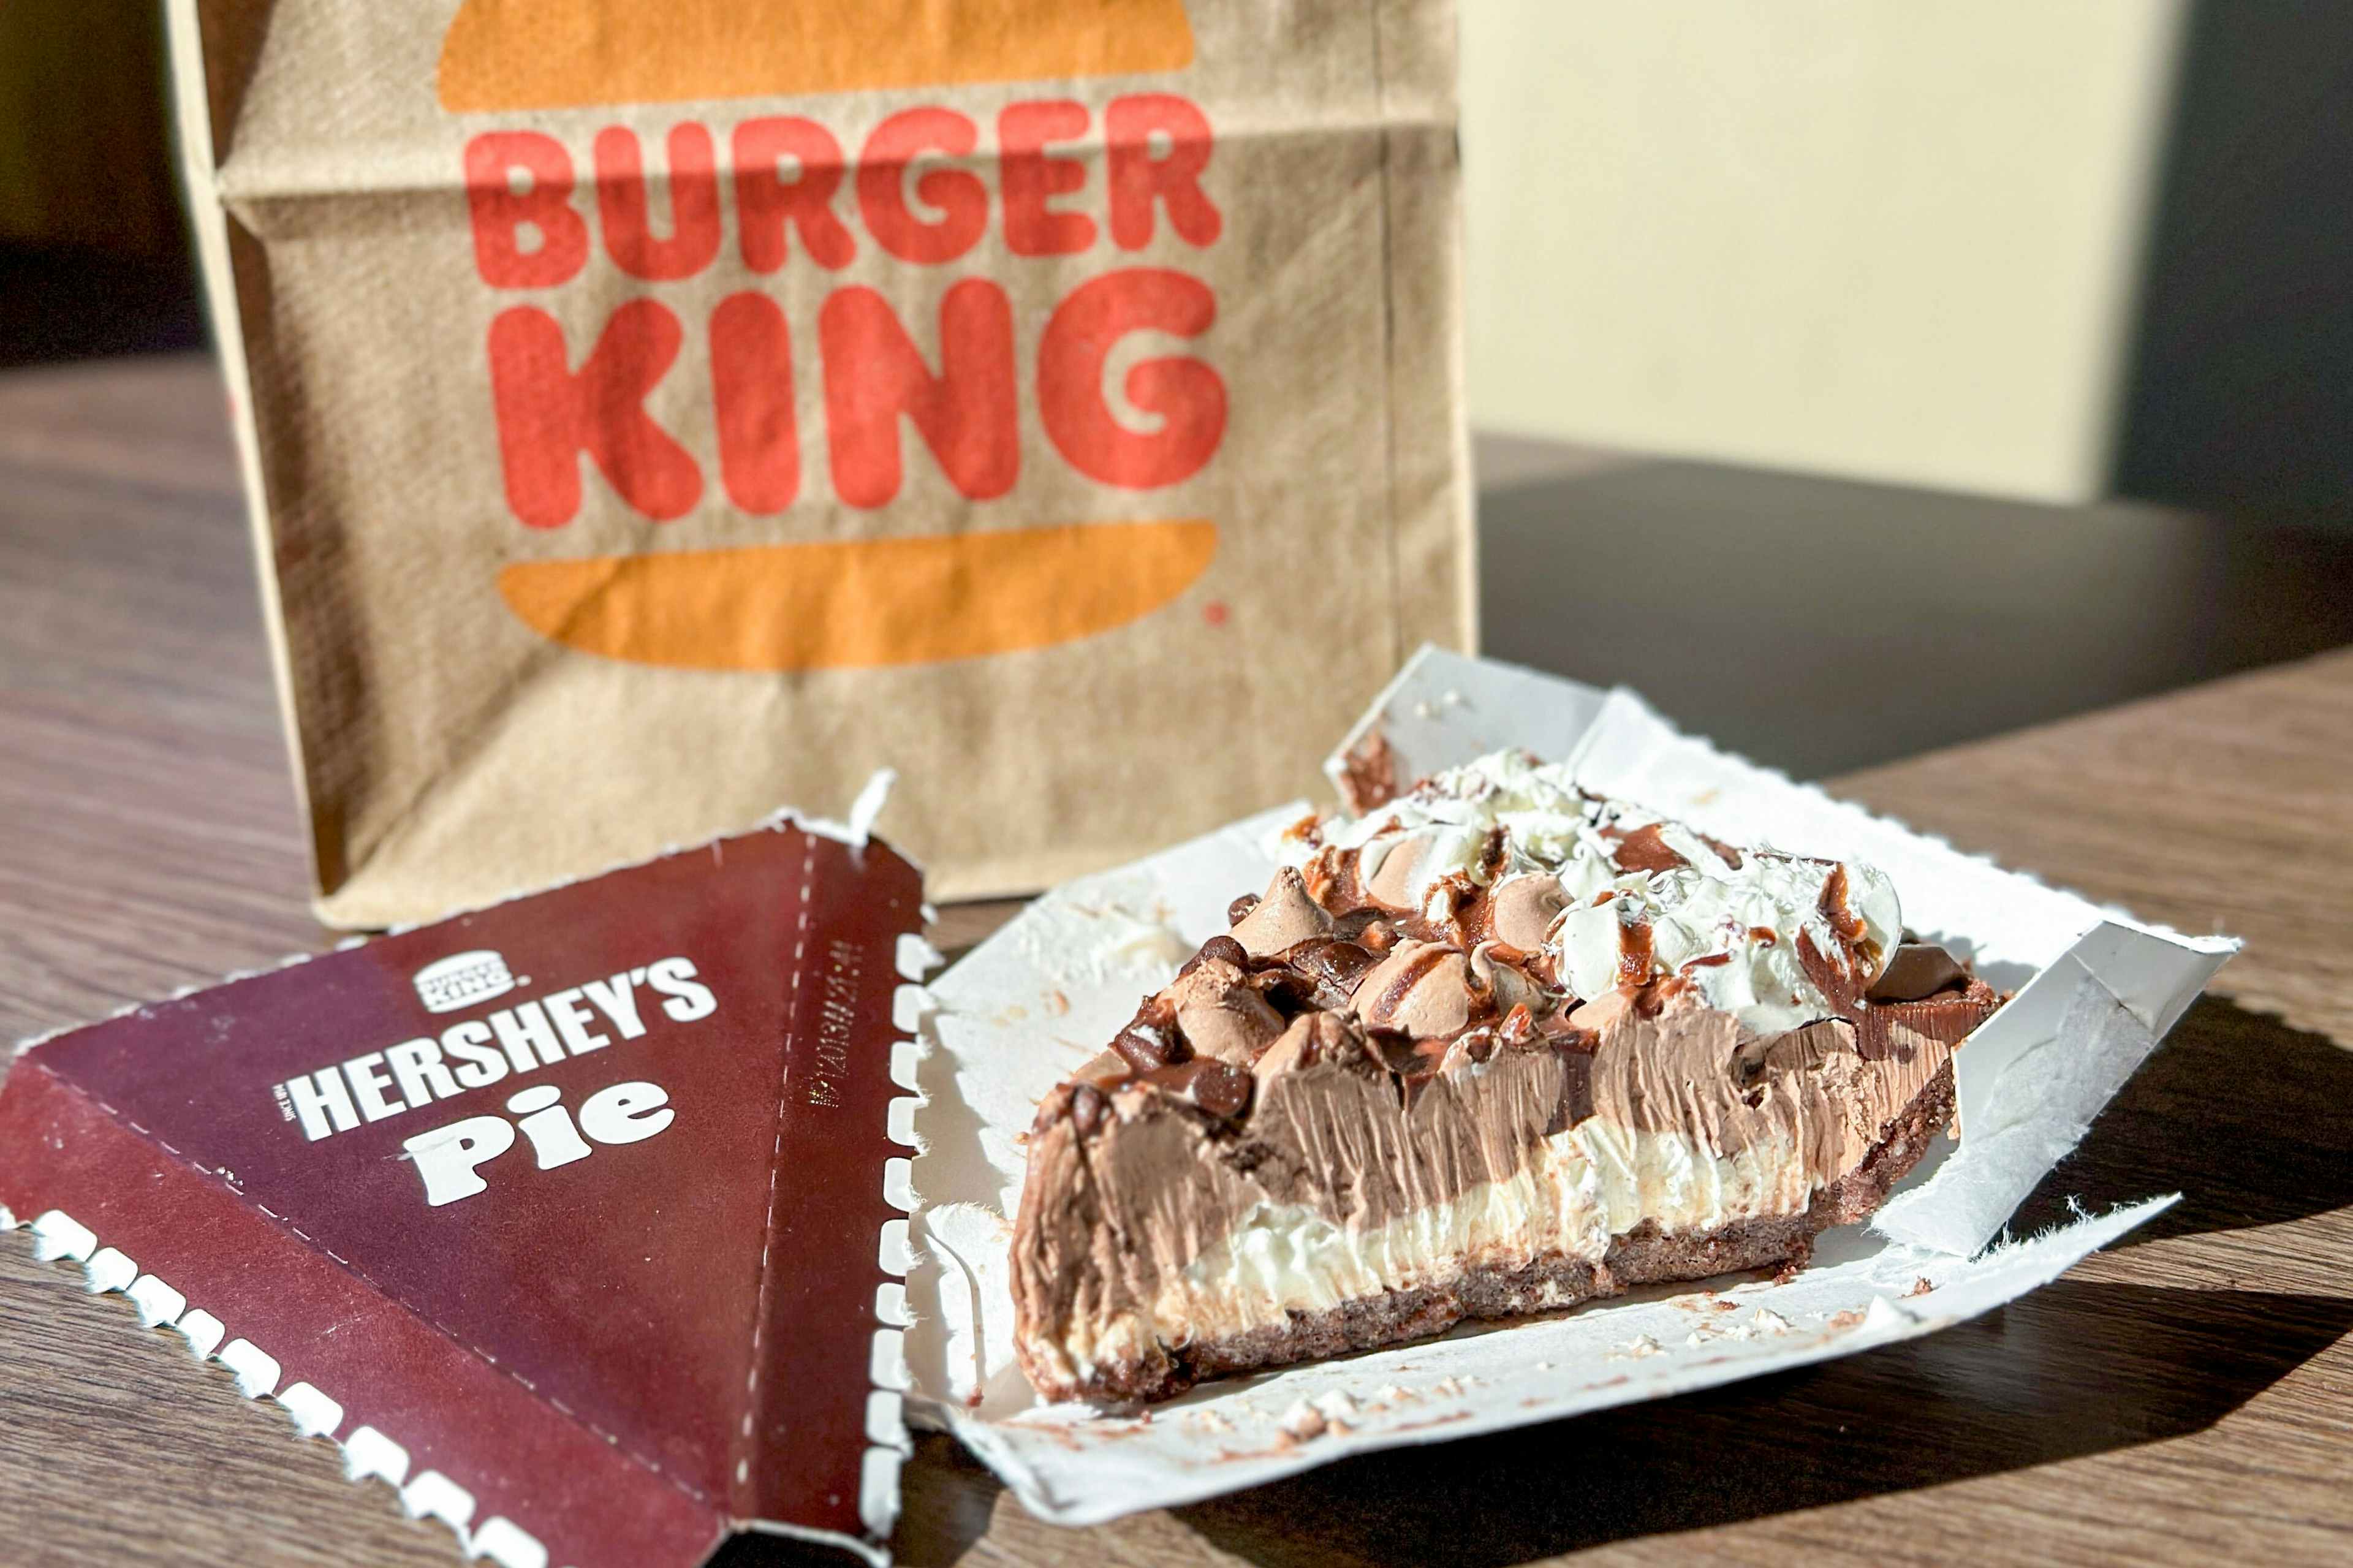 Burger-king-hershey-pie-kcl-3